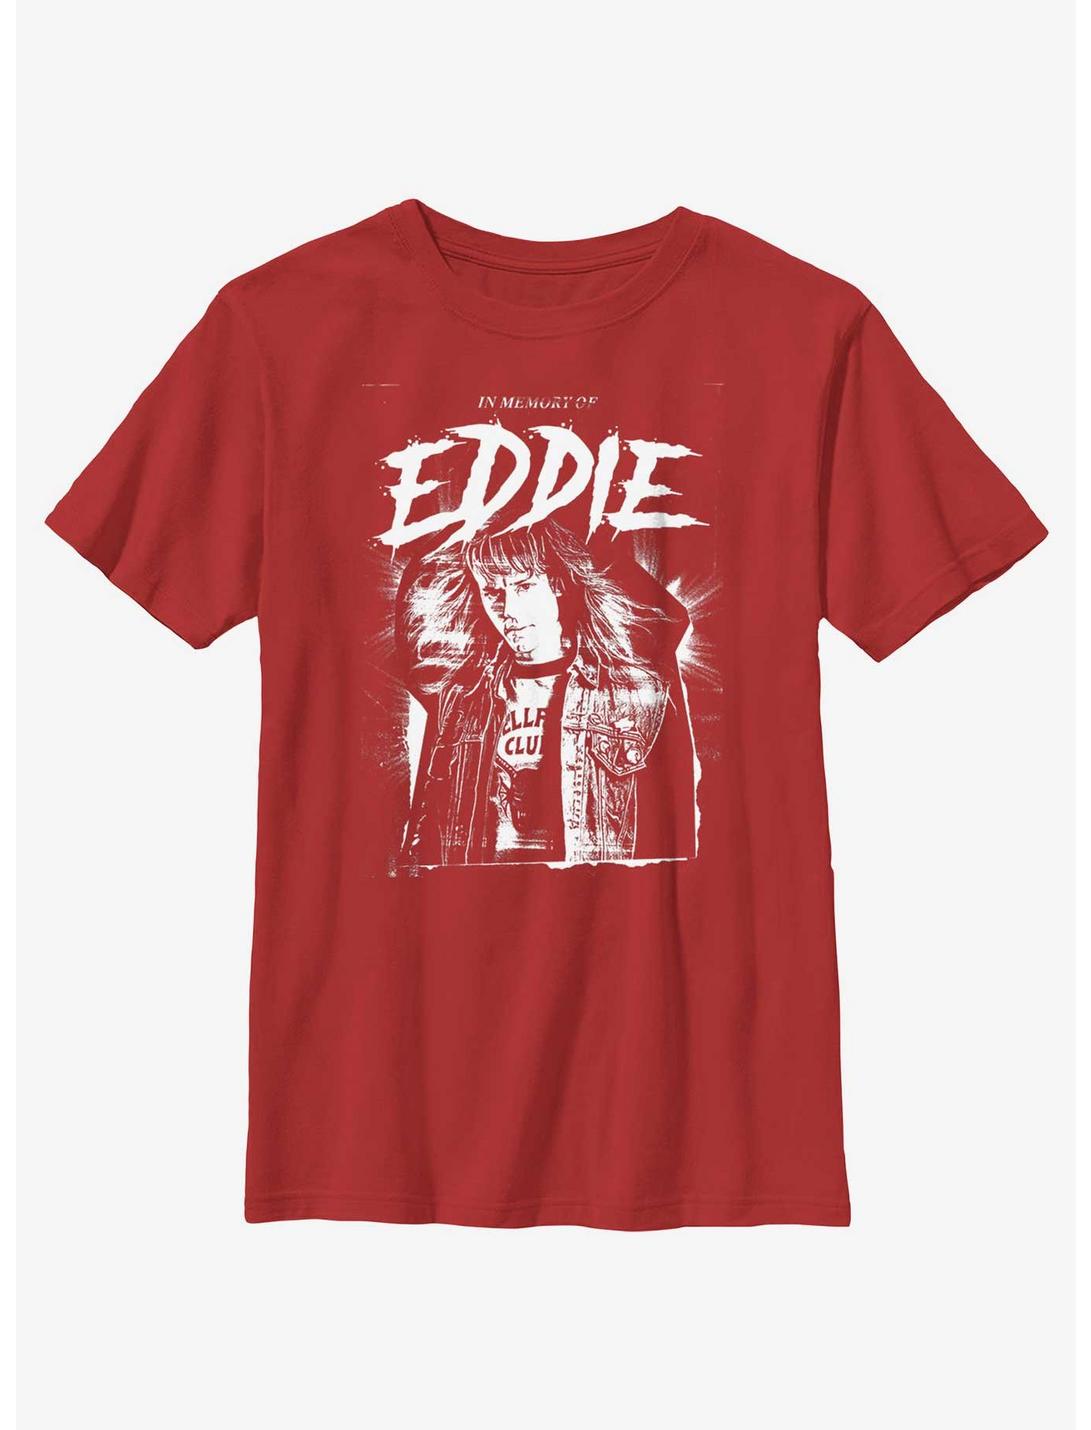 Stranger Things In Memory of Eddie Youth T-Shirt, RED, hi-res